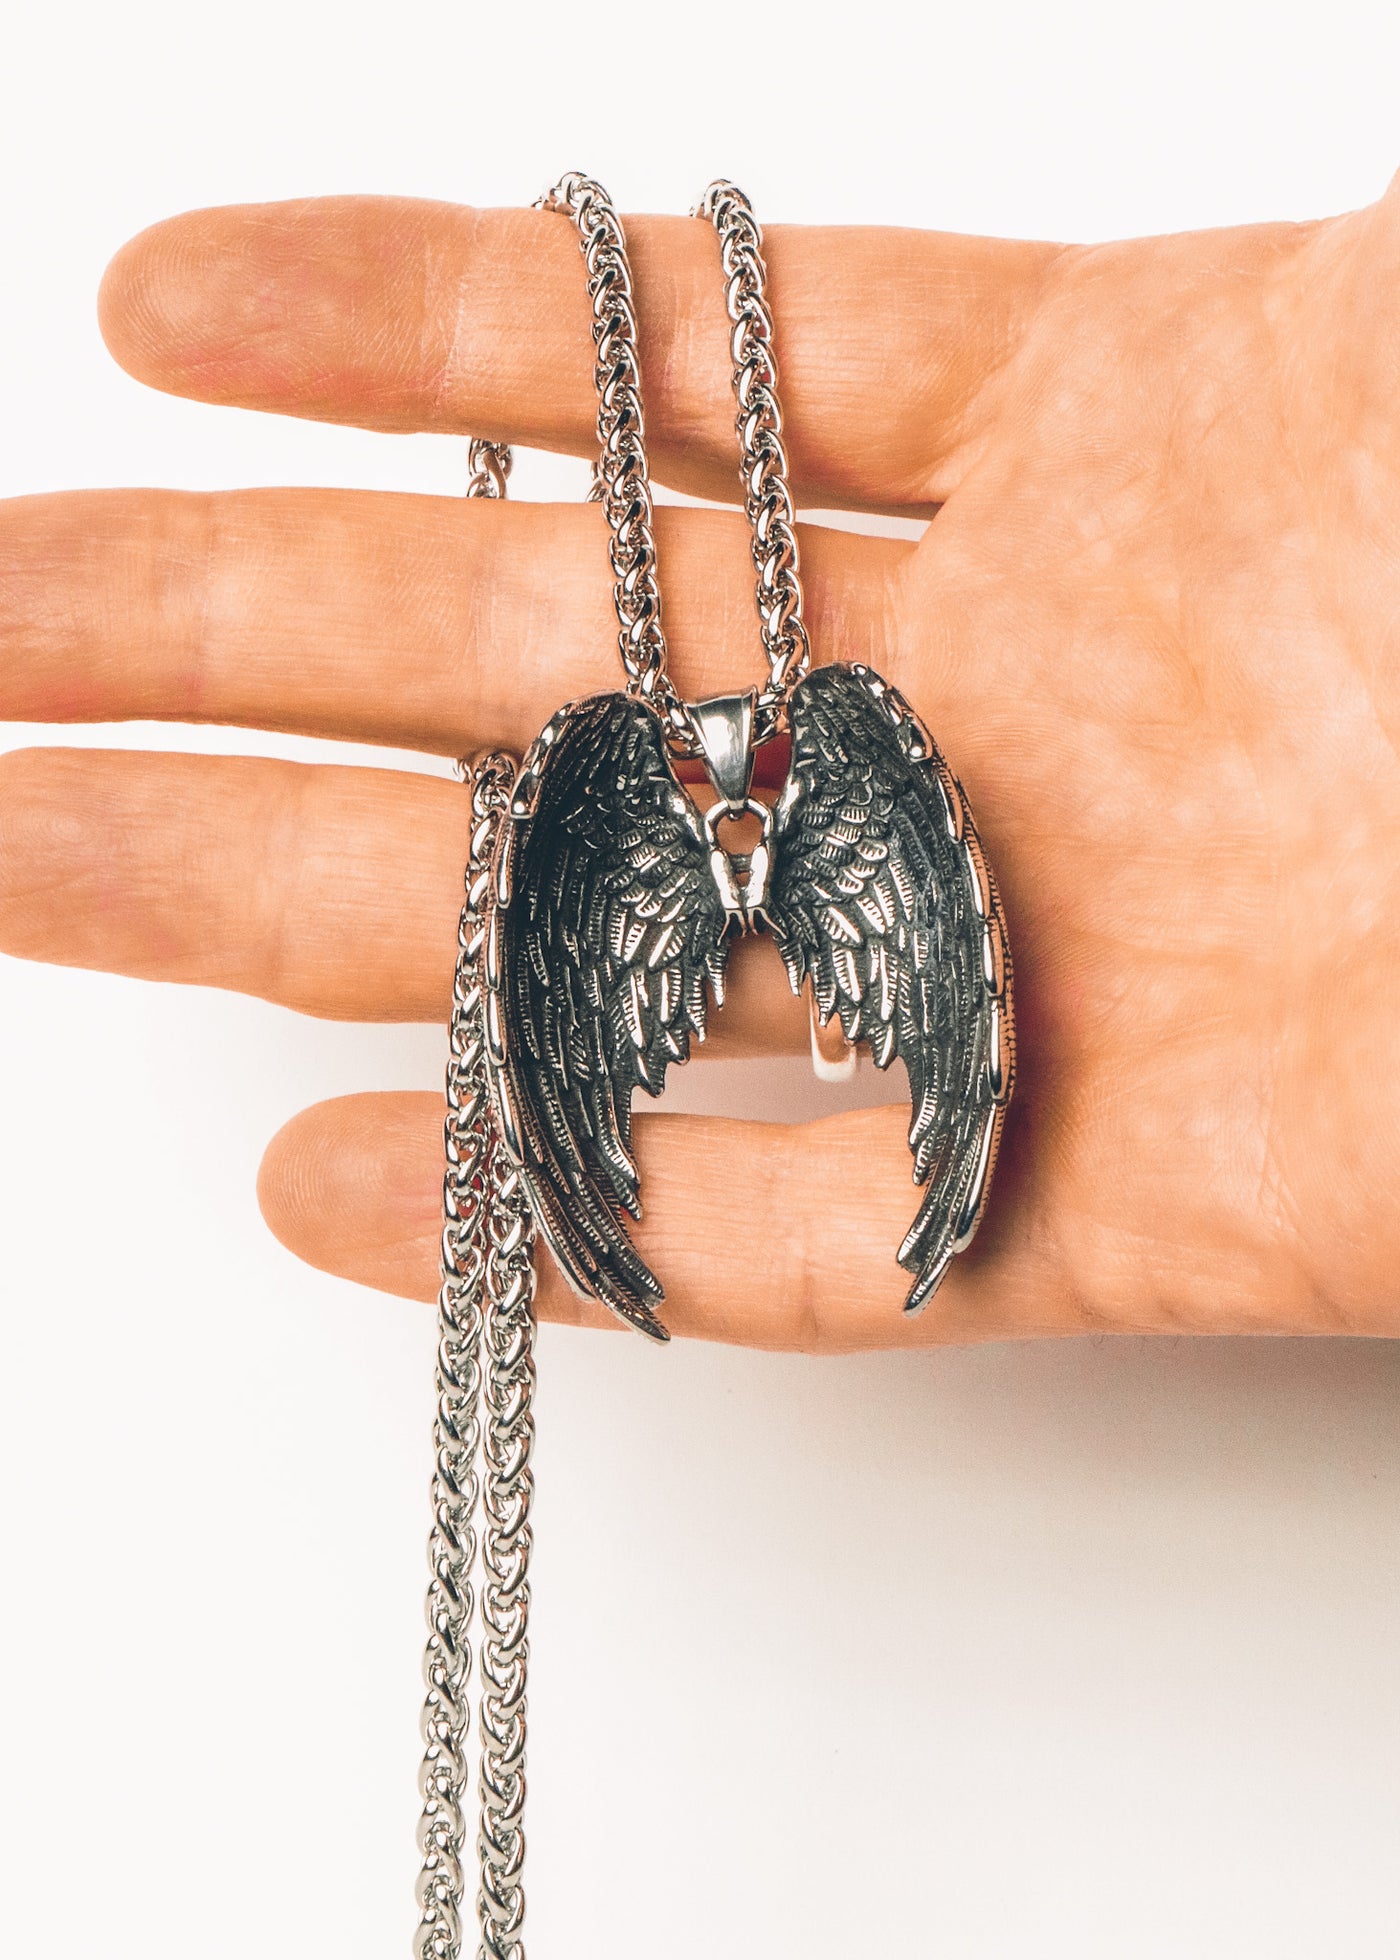 Wings pendant